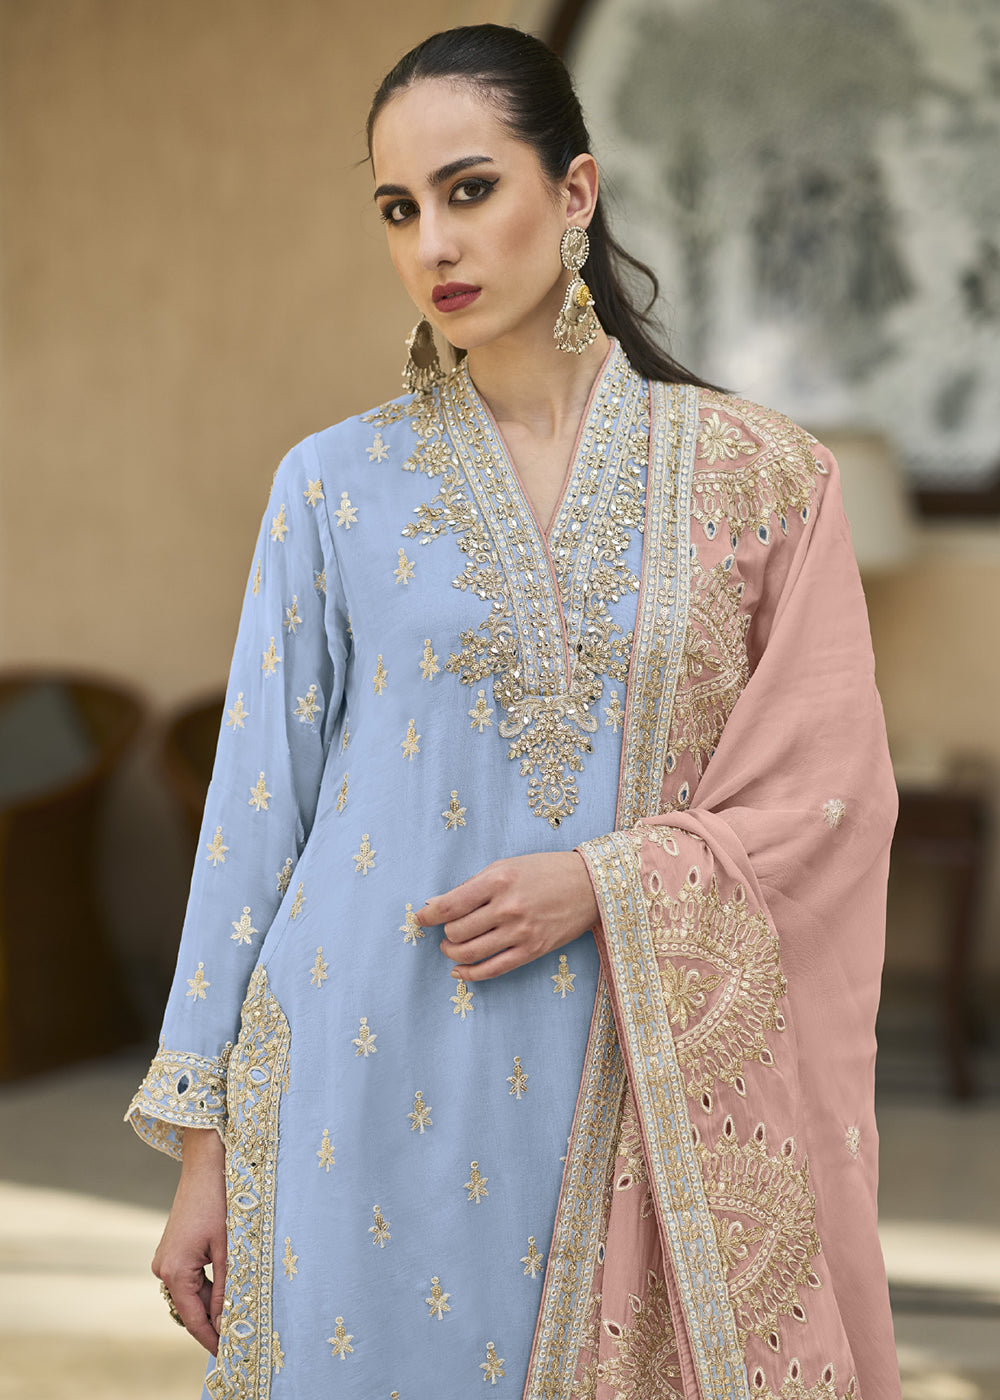 Buy Now Powder Blue Semi Chiffon Pakistani Style Palazzo Suit Online in USA, UK, Canada, Germany, Australia & Worldwide at Empress Clothing.